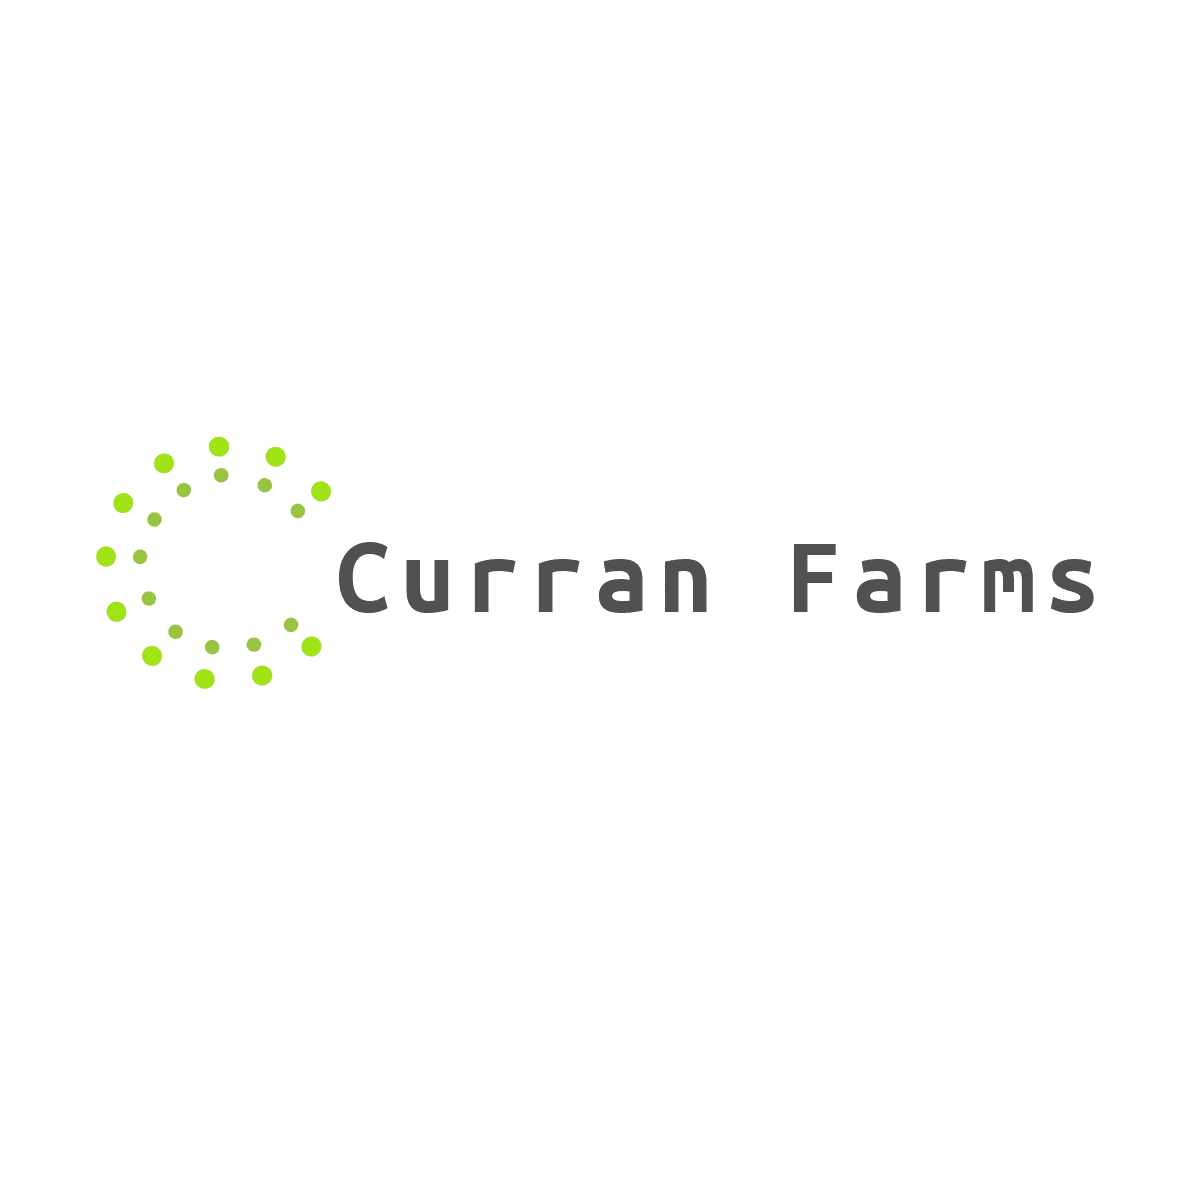 Curranfarms